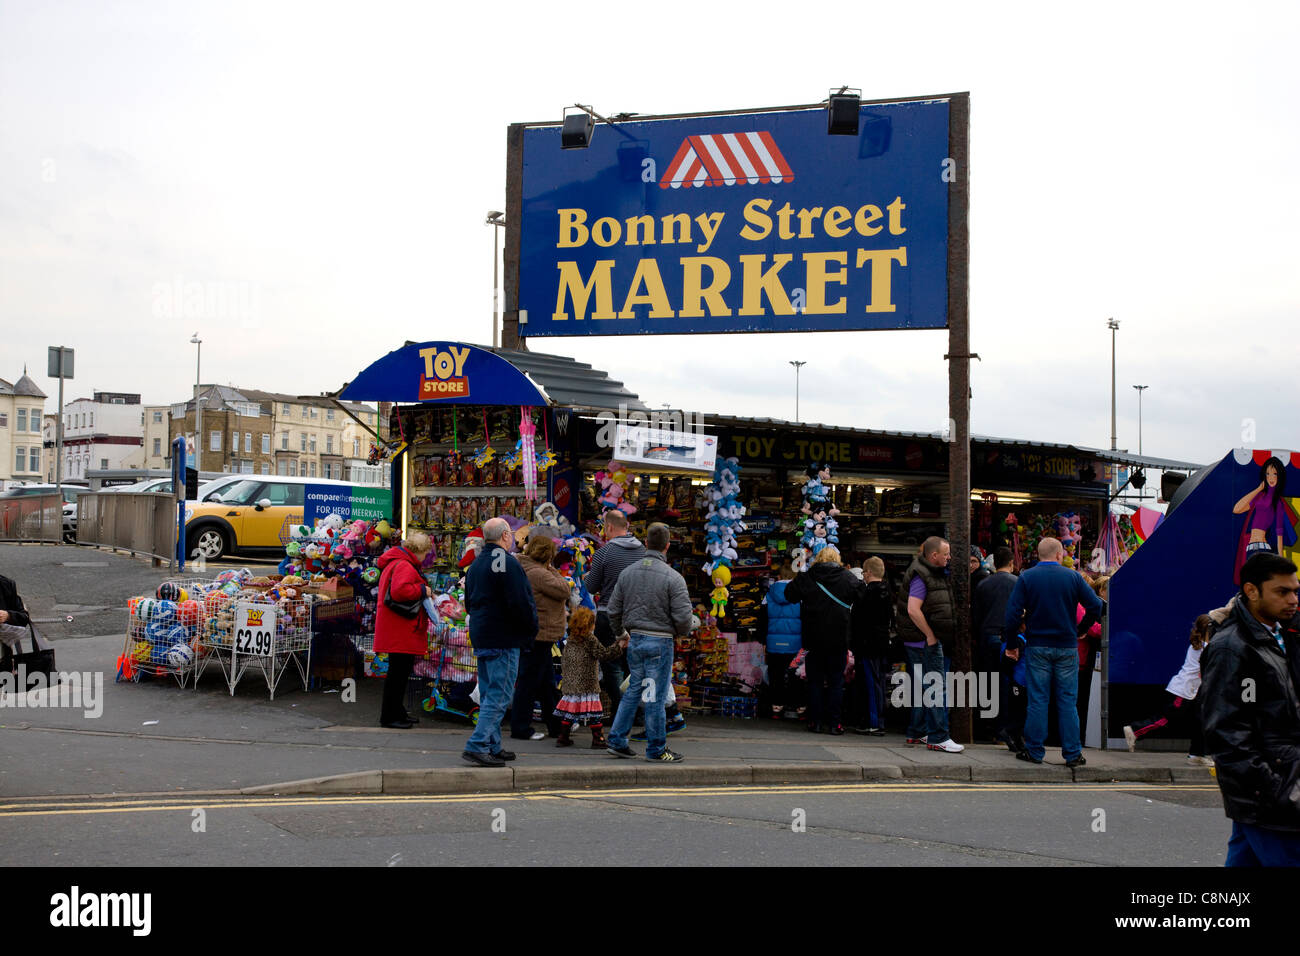 Bonny Street market in Blackpool Stock Photo